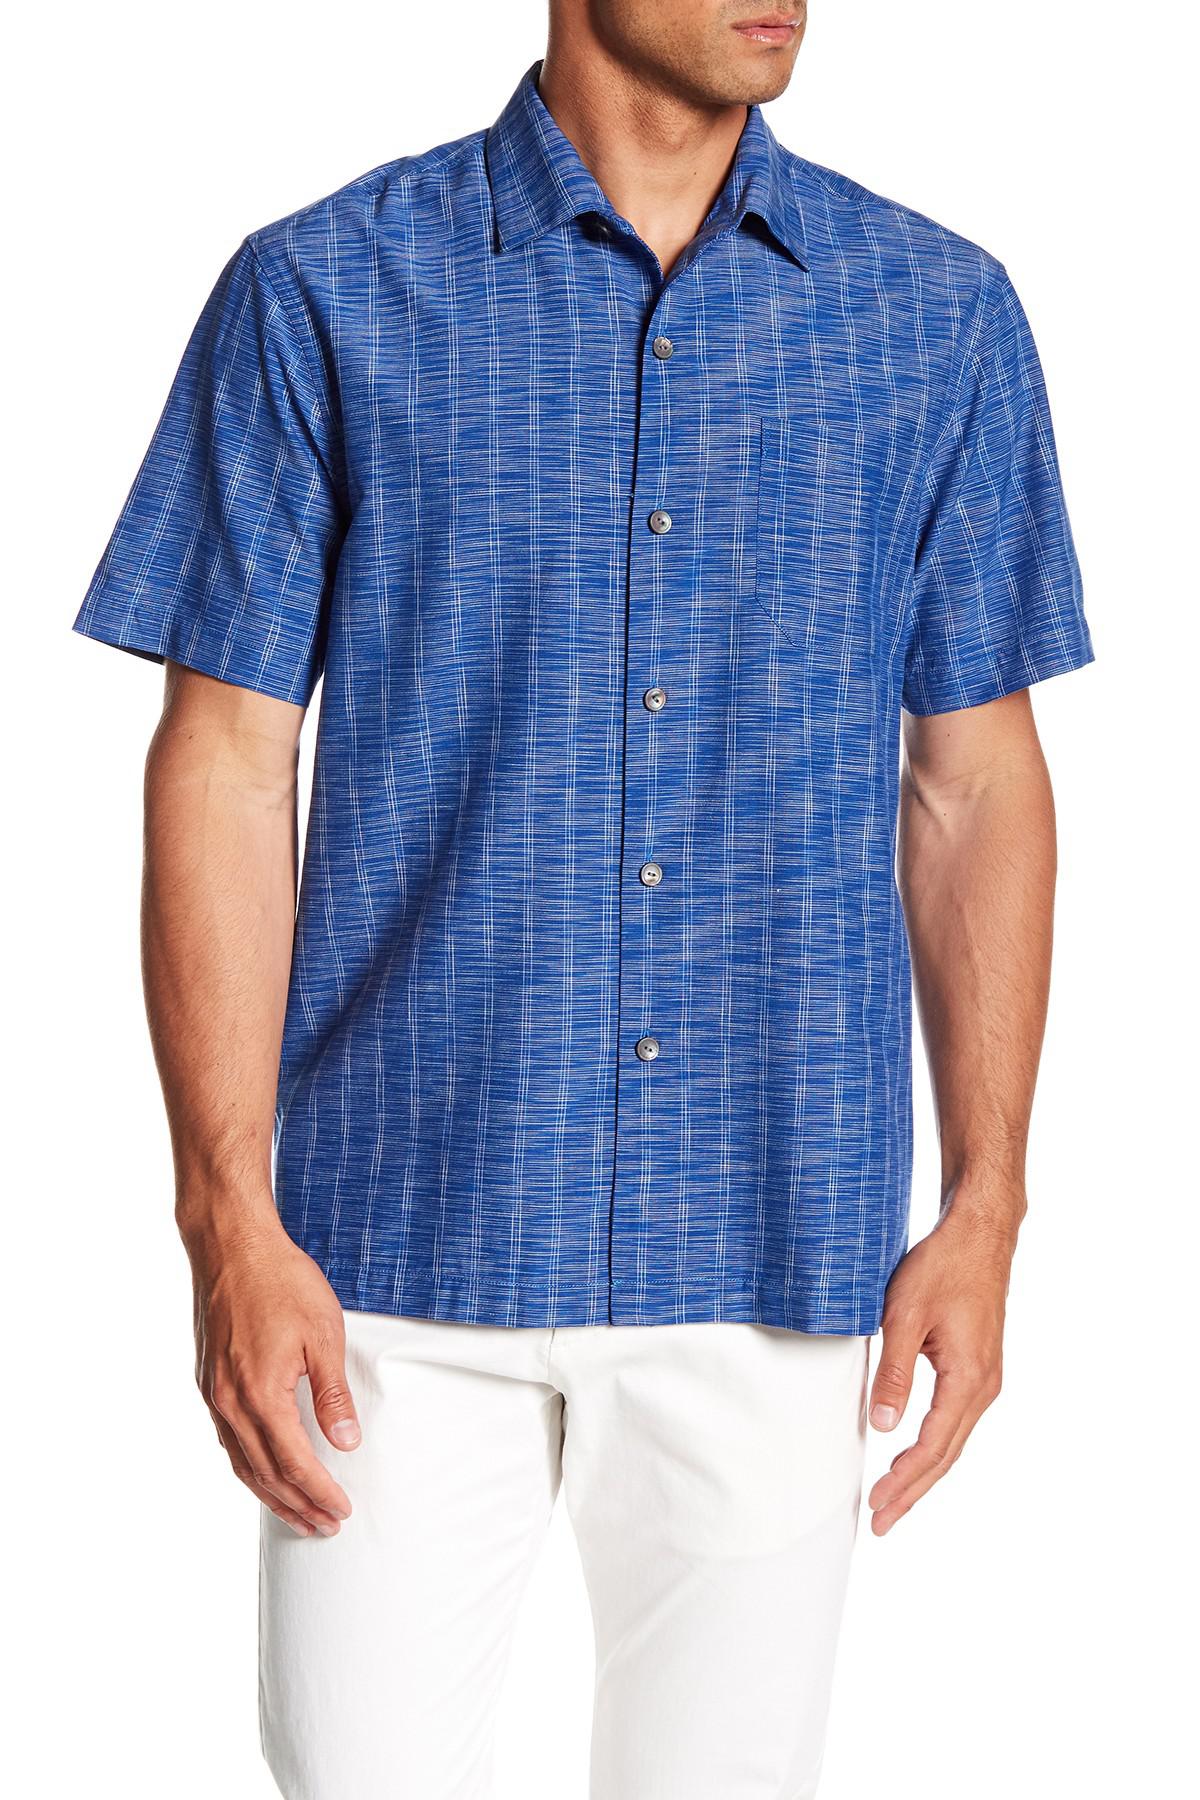 Tommy Bahama Seismic Stripe Short Sleeve Original Fit Silk Shirt in ...